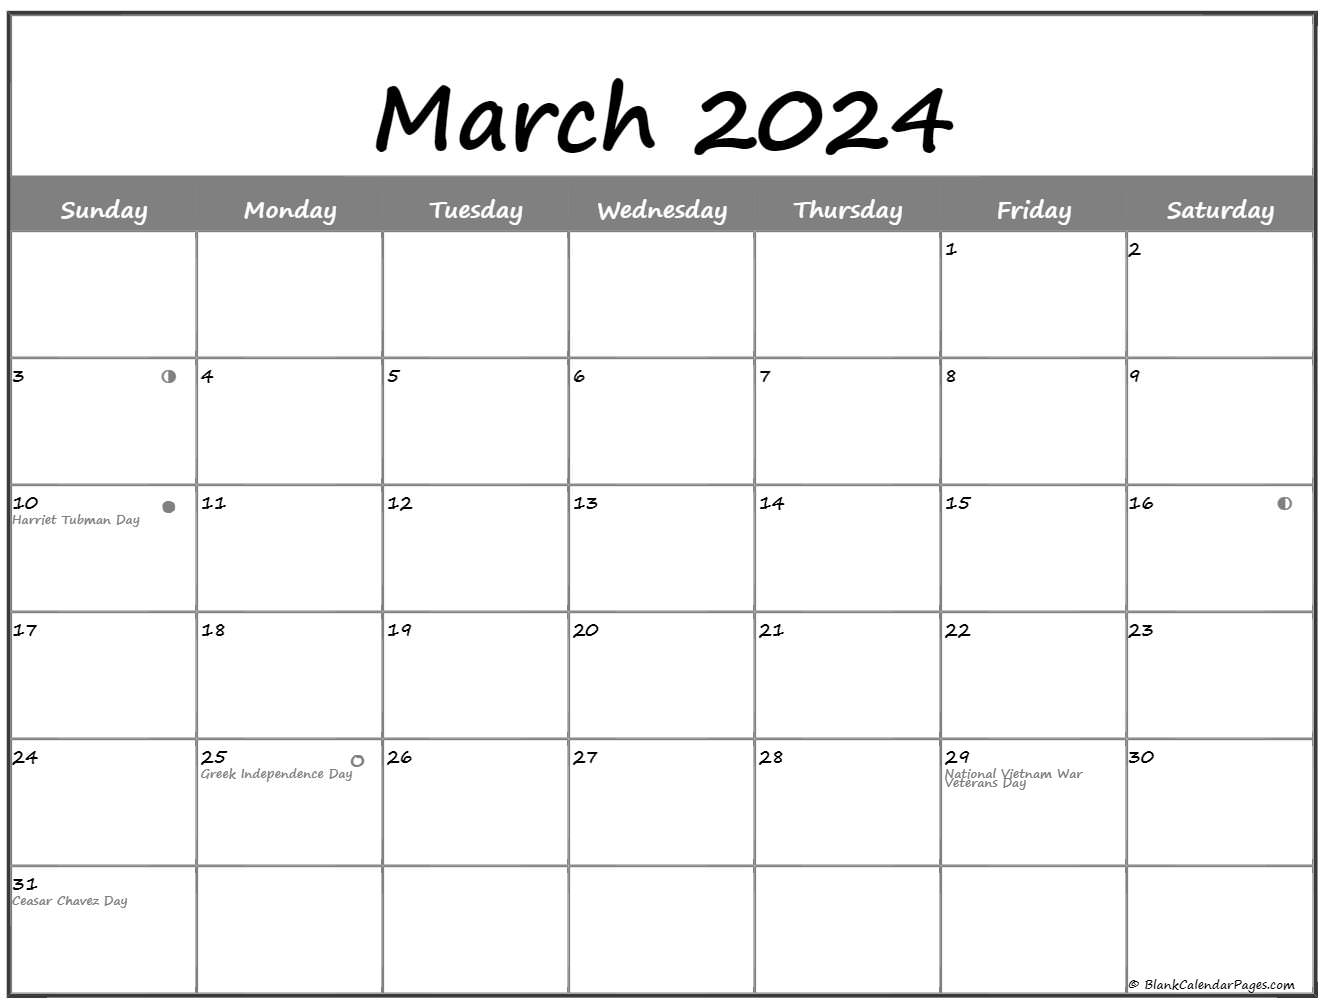 march-2023-lunar-calendar-moon-phase-calendar